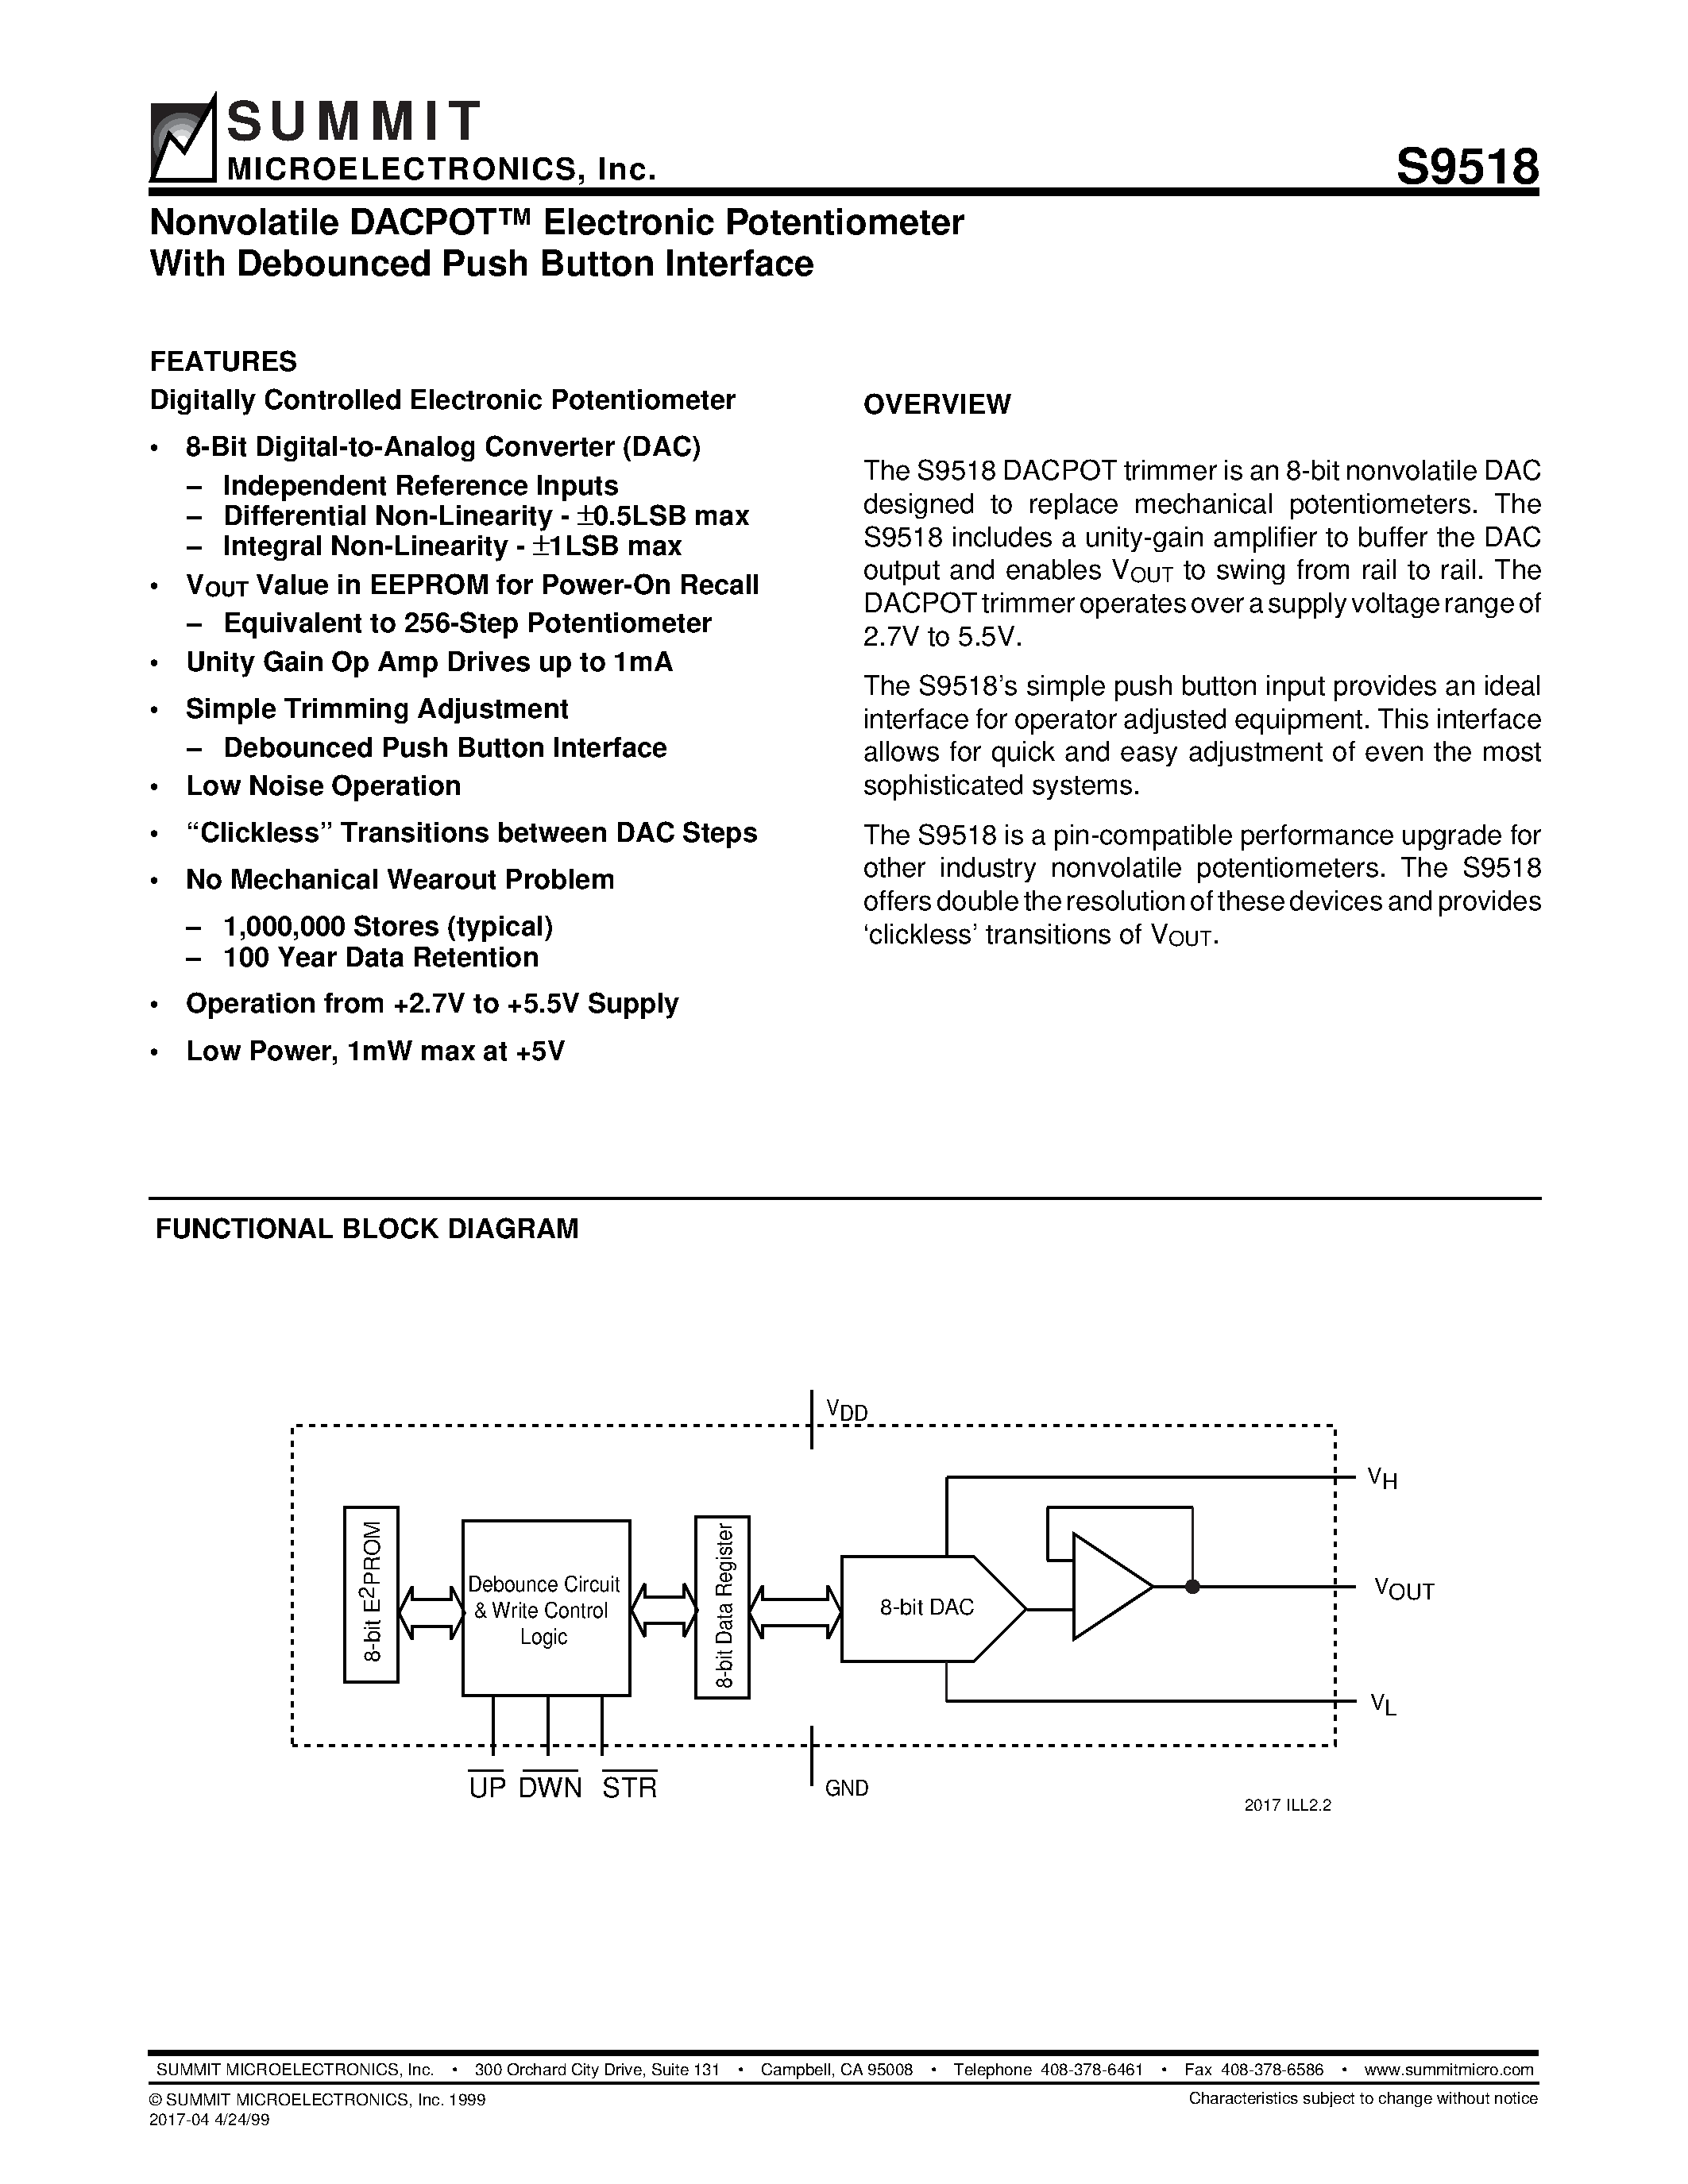 Datasheet S9518S - Nonvolatile DACPOT Electronic Potentiometer With Debounced Push Button Interface page 1